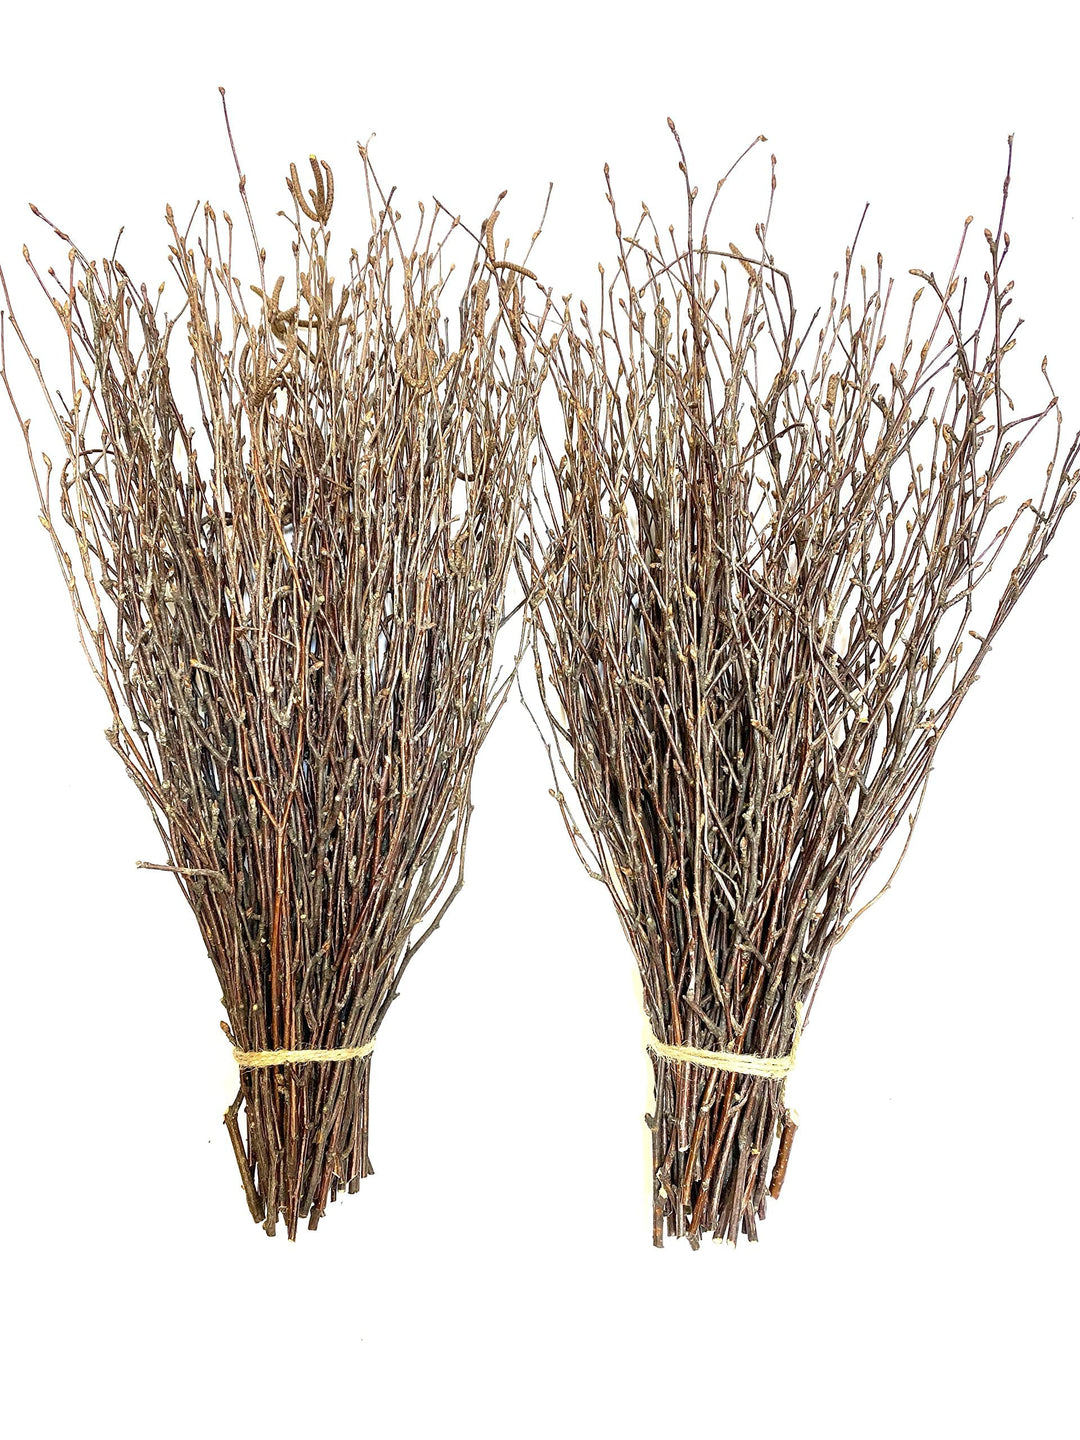 Uieke 200PCS Birch Twigs – 17 Inch Natural Dried Plants Decorative Birch  Branches for DIY Crafts, Birch Sticks for Vases Wedding Arrangements Home